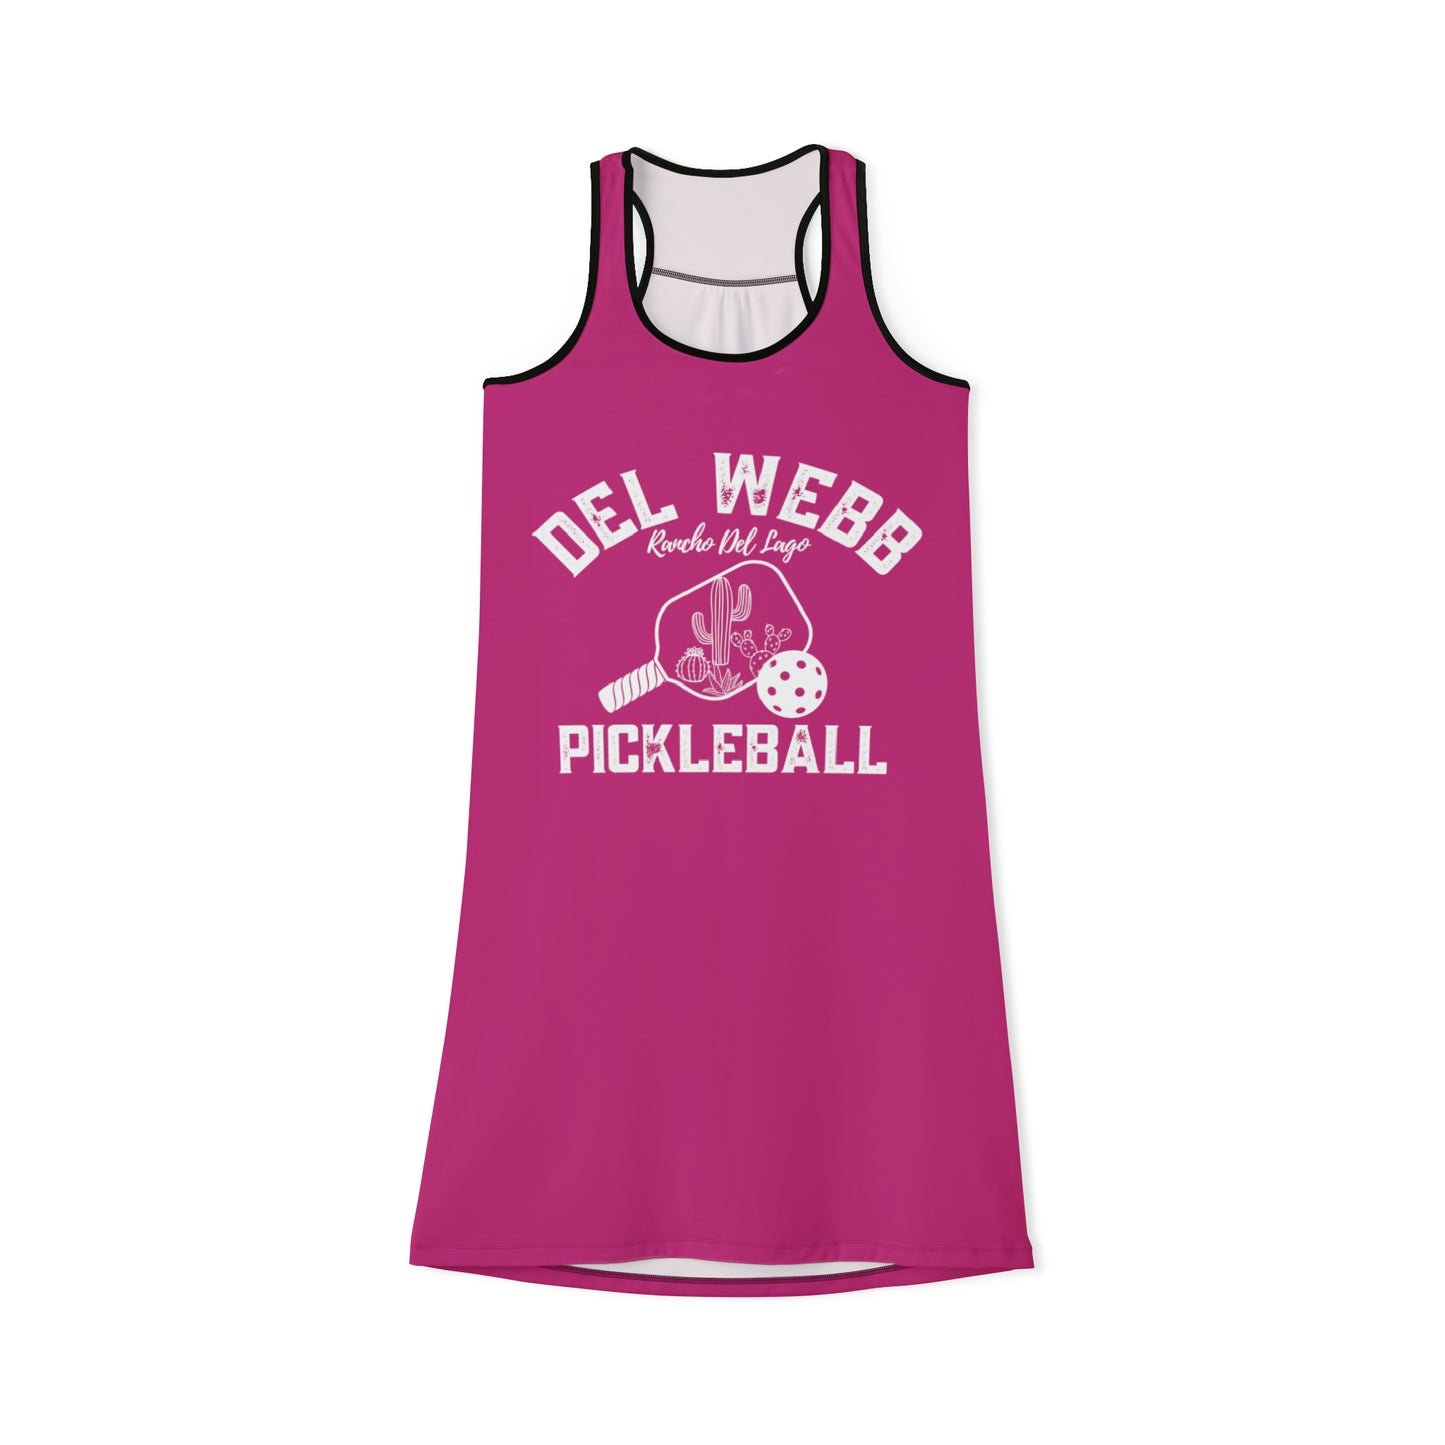 Del Web Pickleball -Women's Racerback Dress